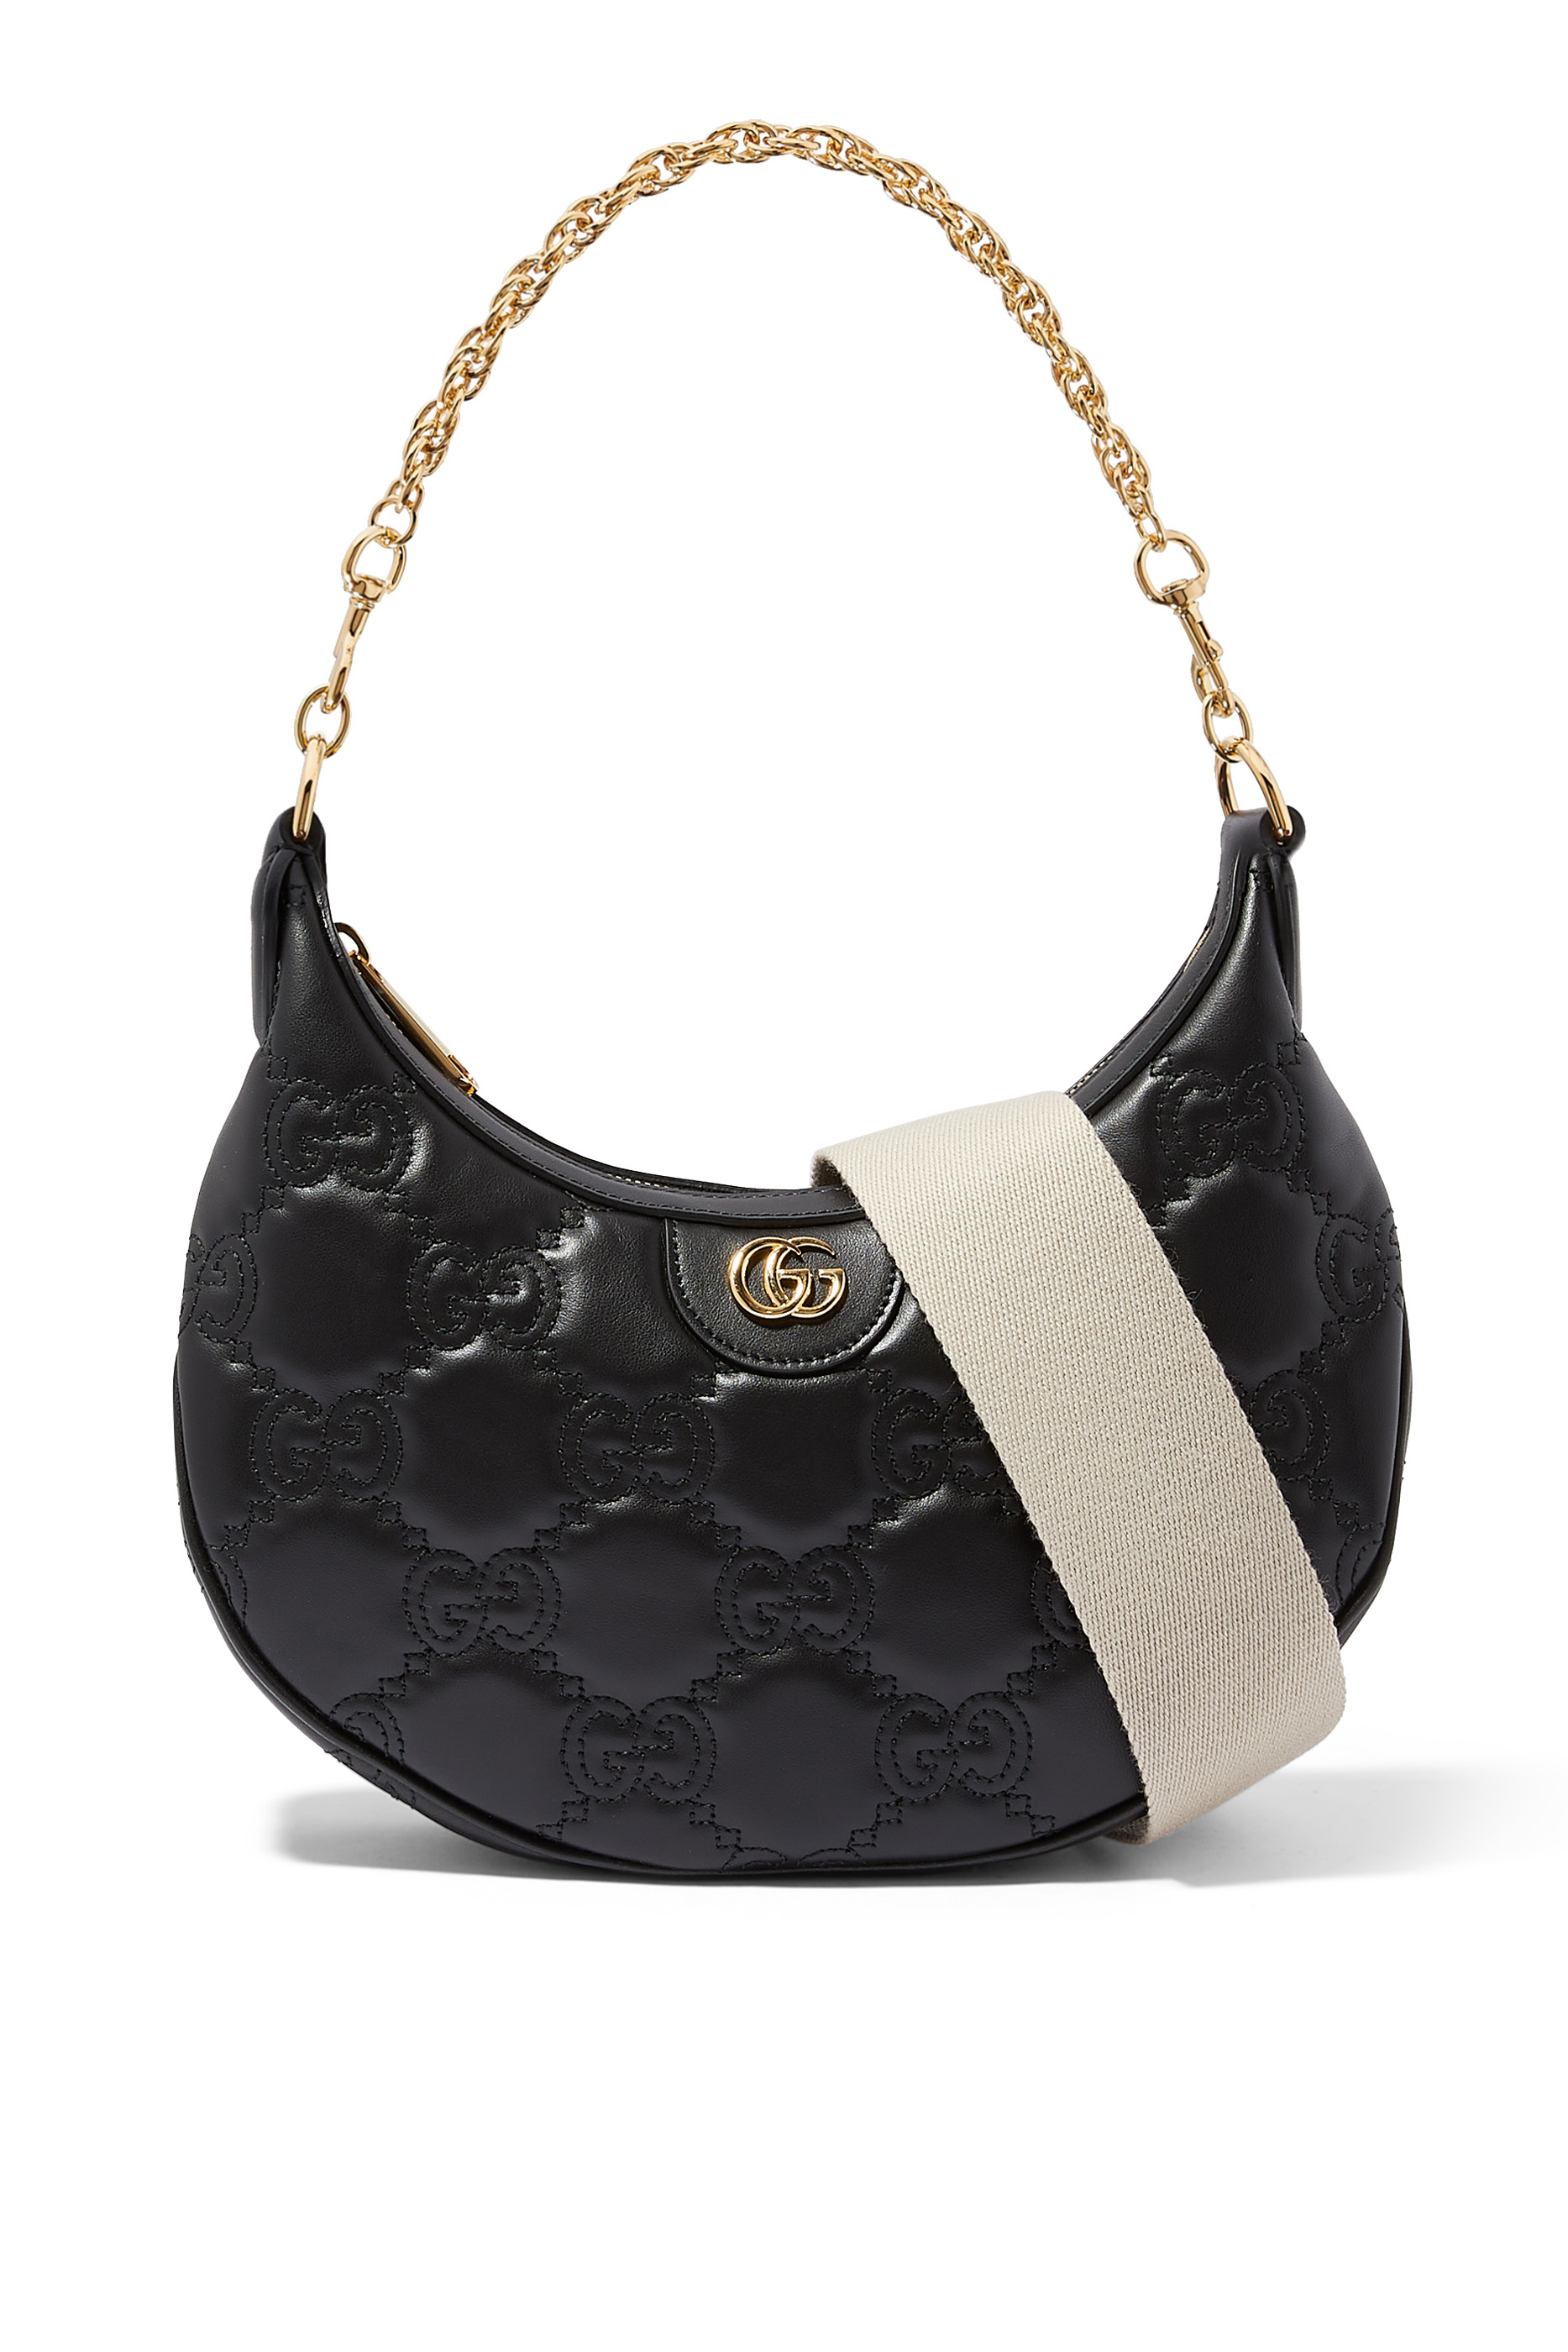 Buy Gucci GG Matelassé Small Shoulder Bag for Womens | Bloomingdale's ...